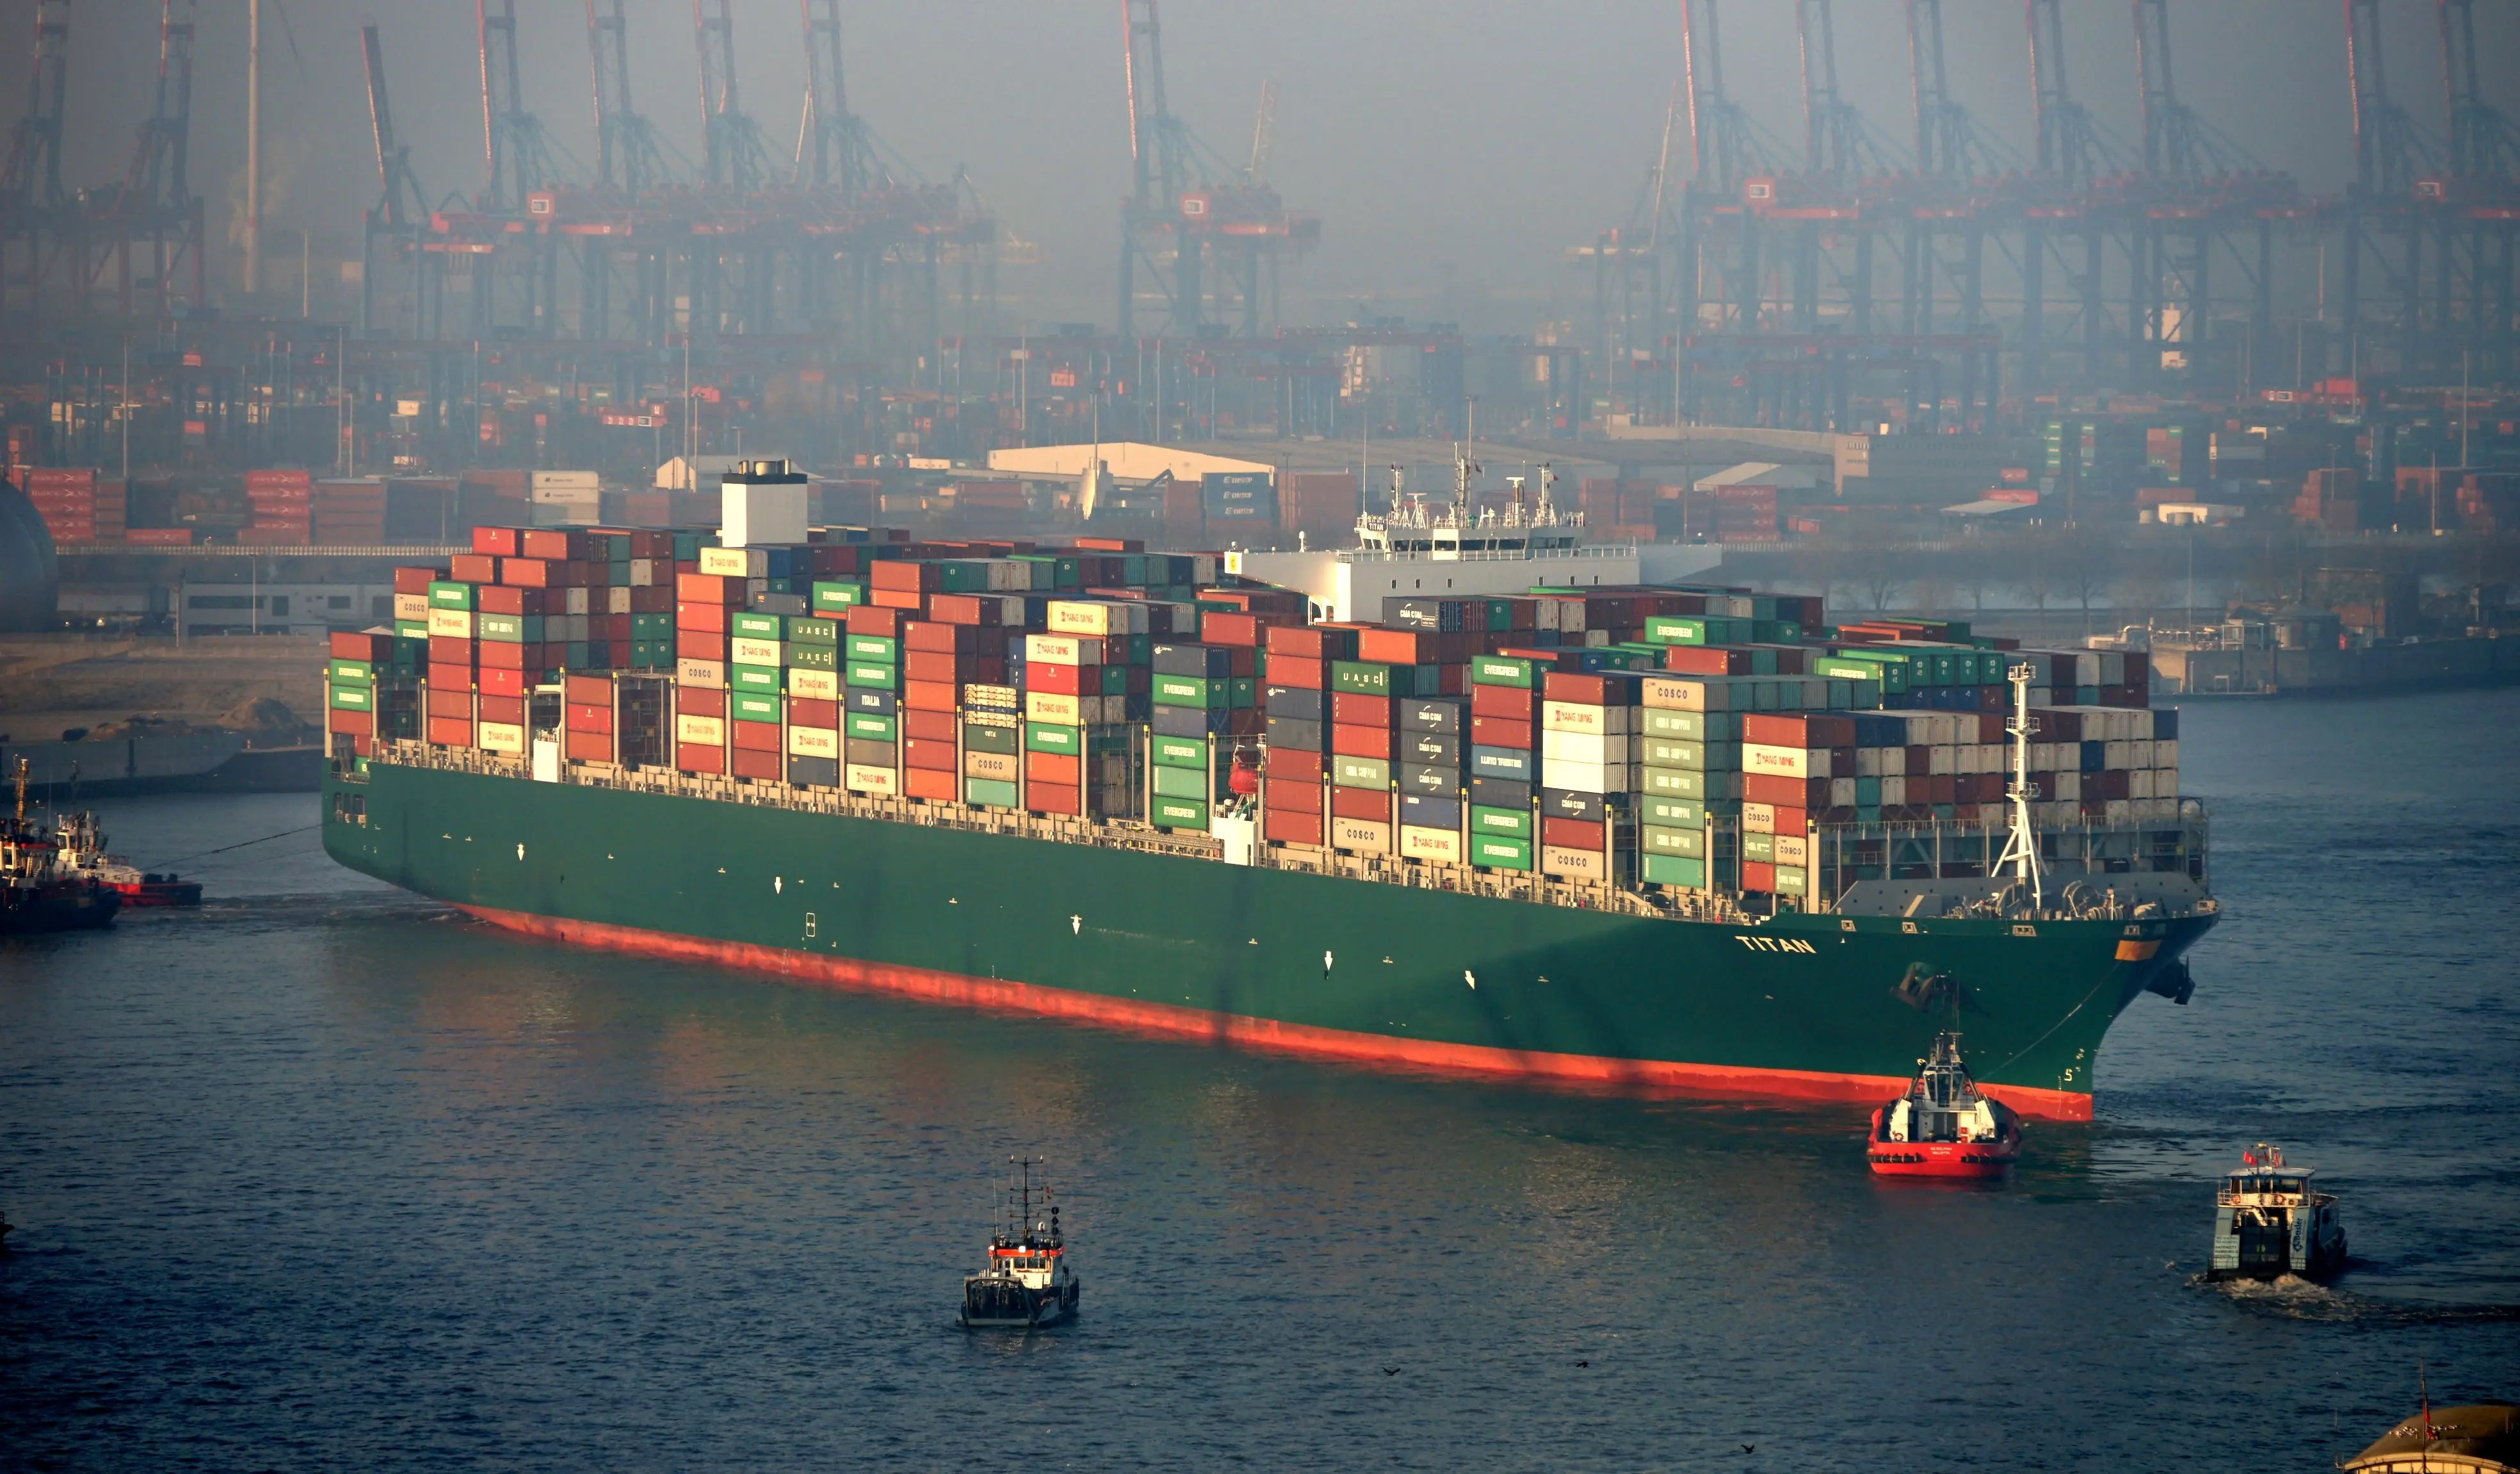 UK Maritime Tech – Smart Green Shipping Alliance